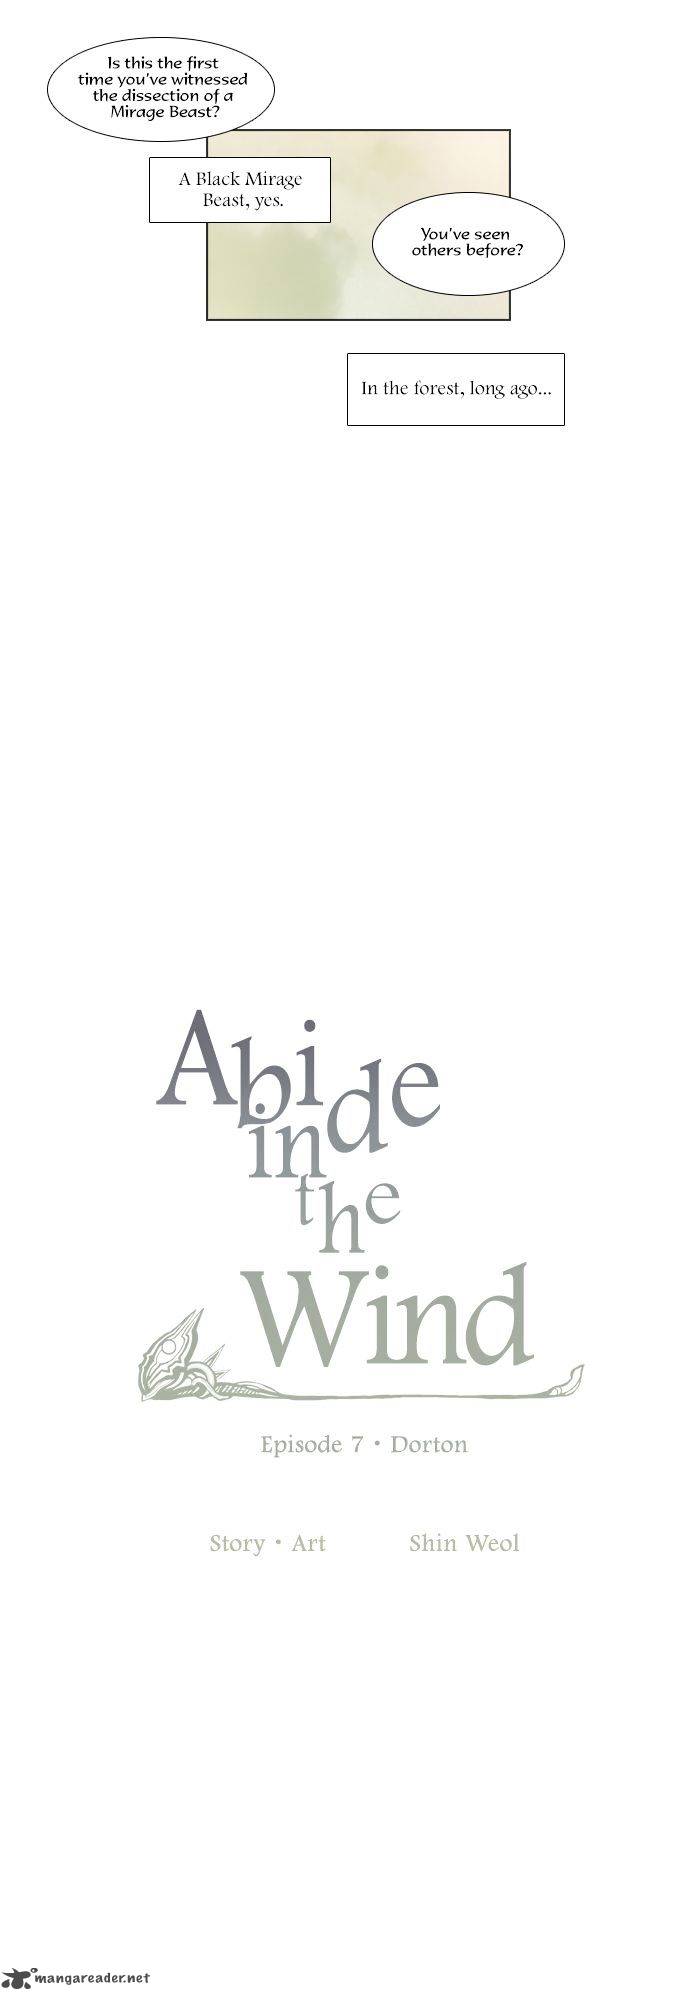 abide_in_the_wind_126_5